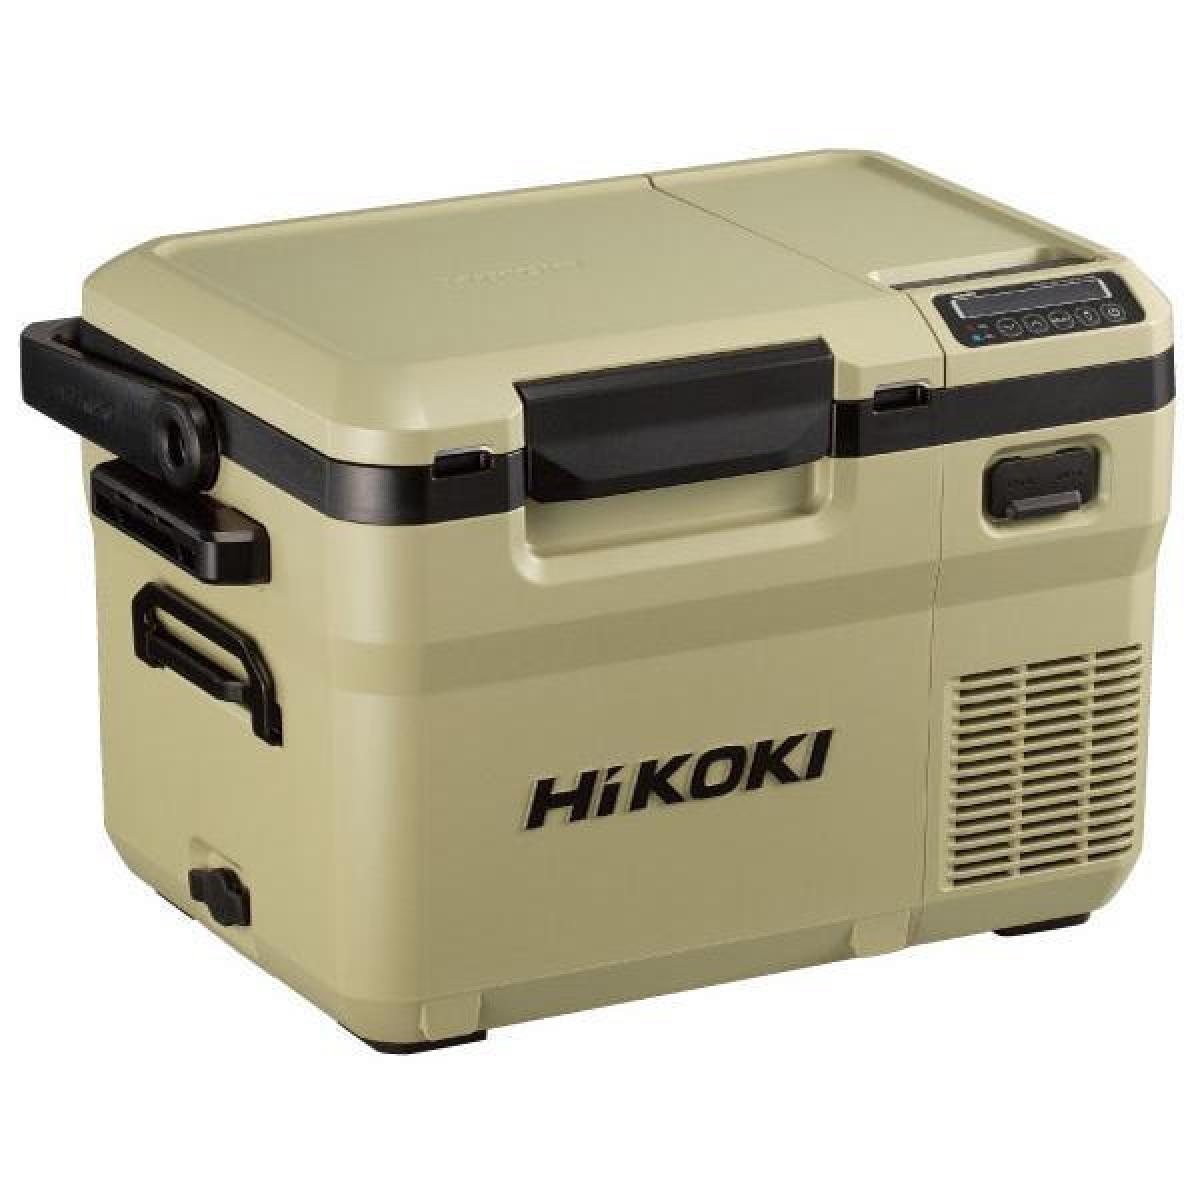 HIKOKI ハイコーキ 14.4/18V コードレス 冷温庫 UL18DD (XMBZ) サンドベージュ コンパクト USB端子 蓄電池の充電機能 3電源使用可能